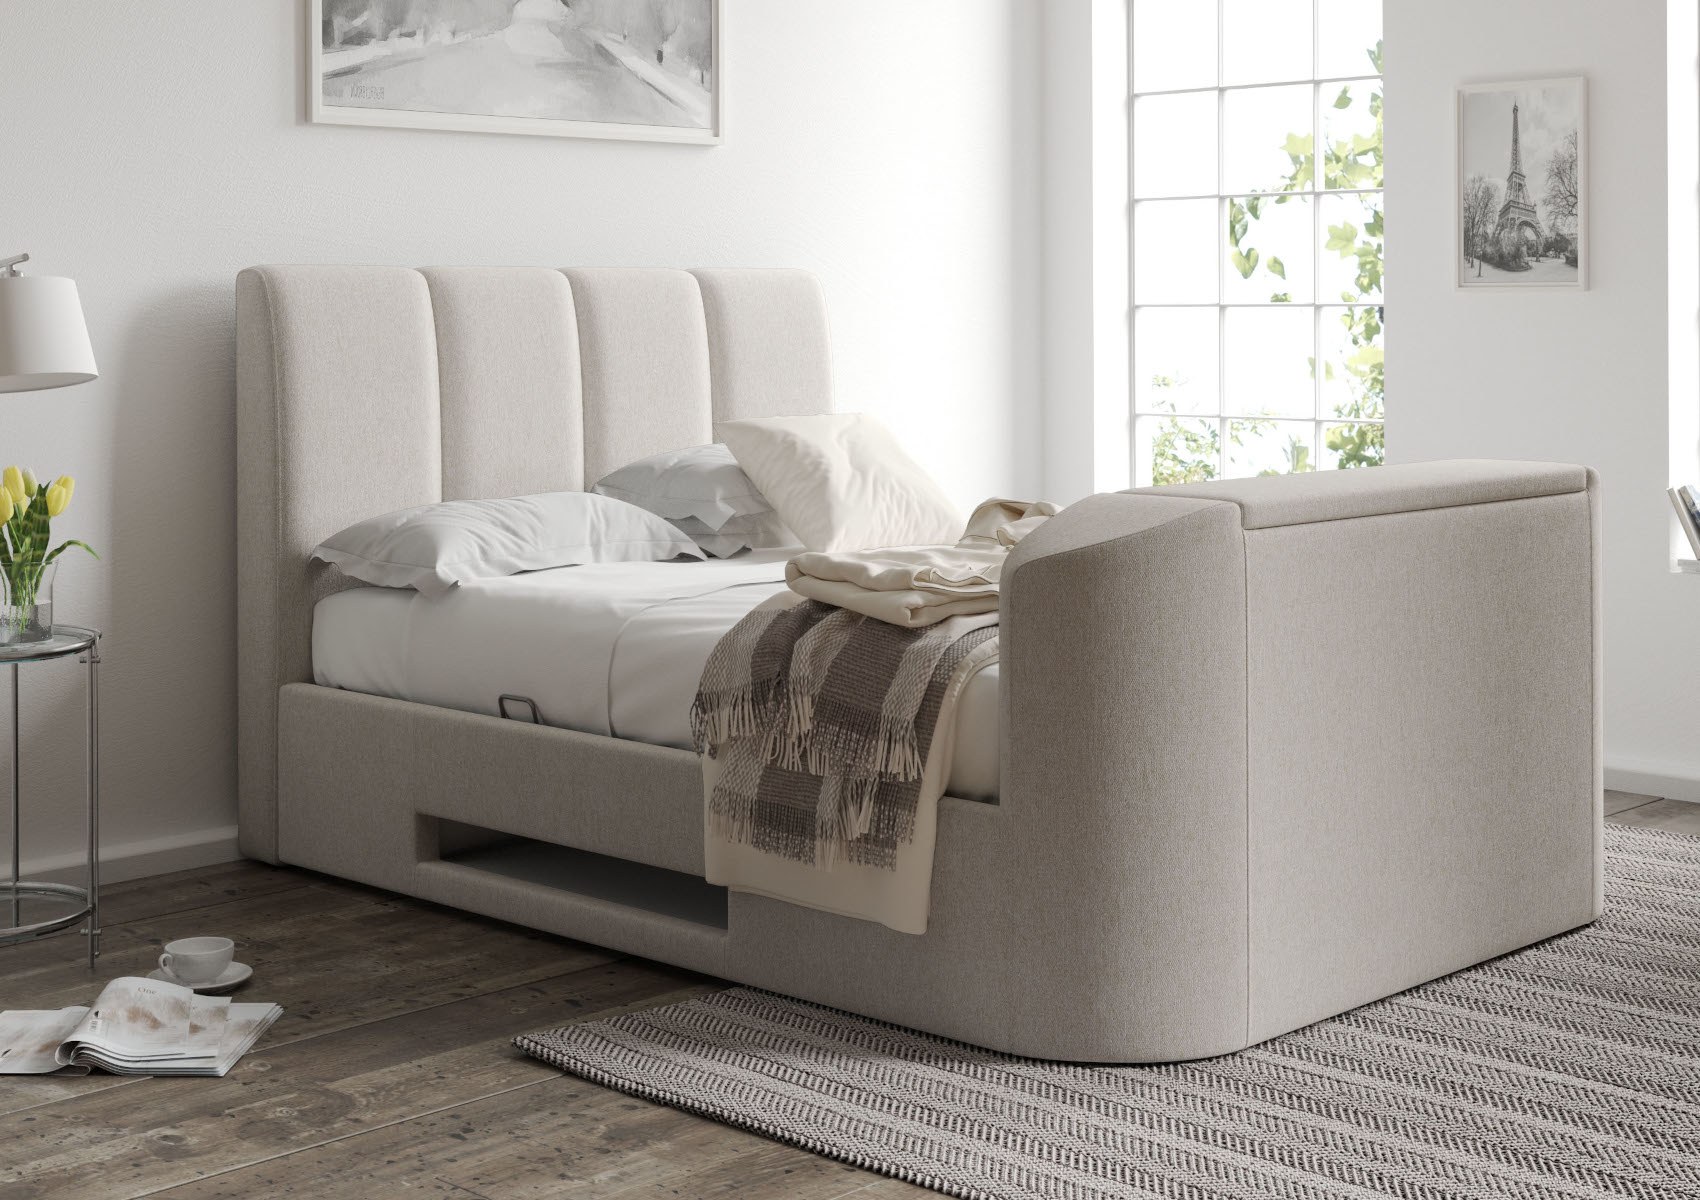 View Copenhagen Upholstered Multifunctional Ottoman Smart TV Bed Shell Time4Sleep information